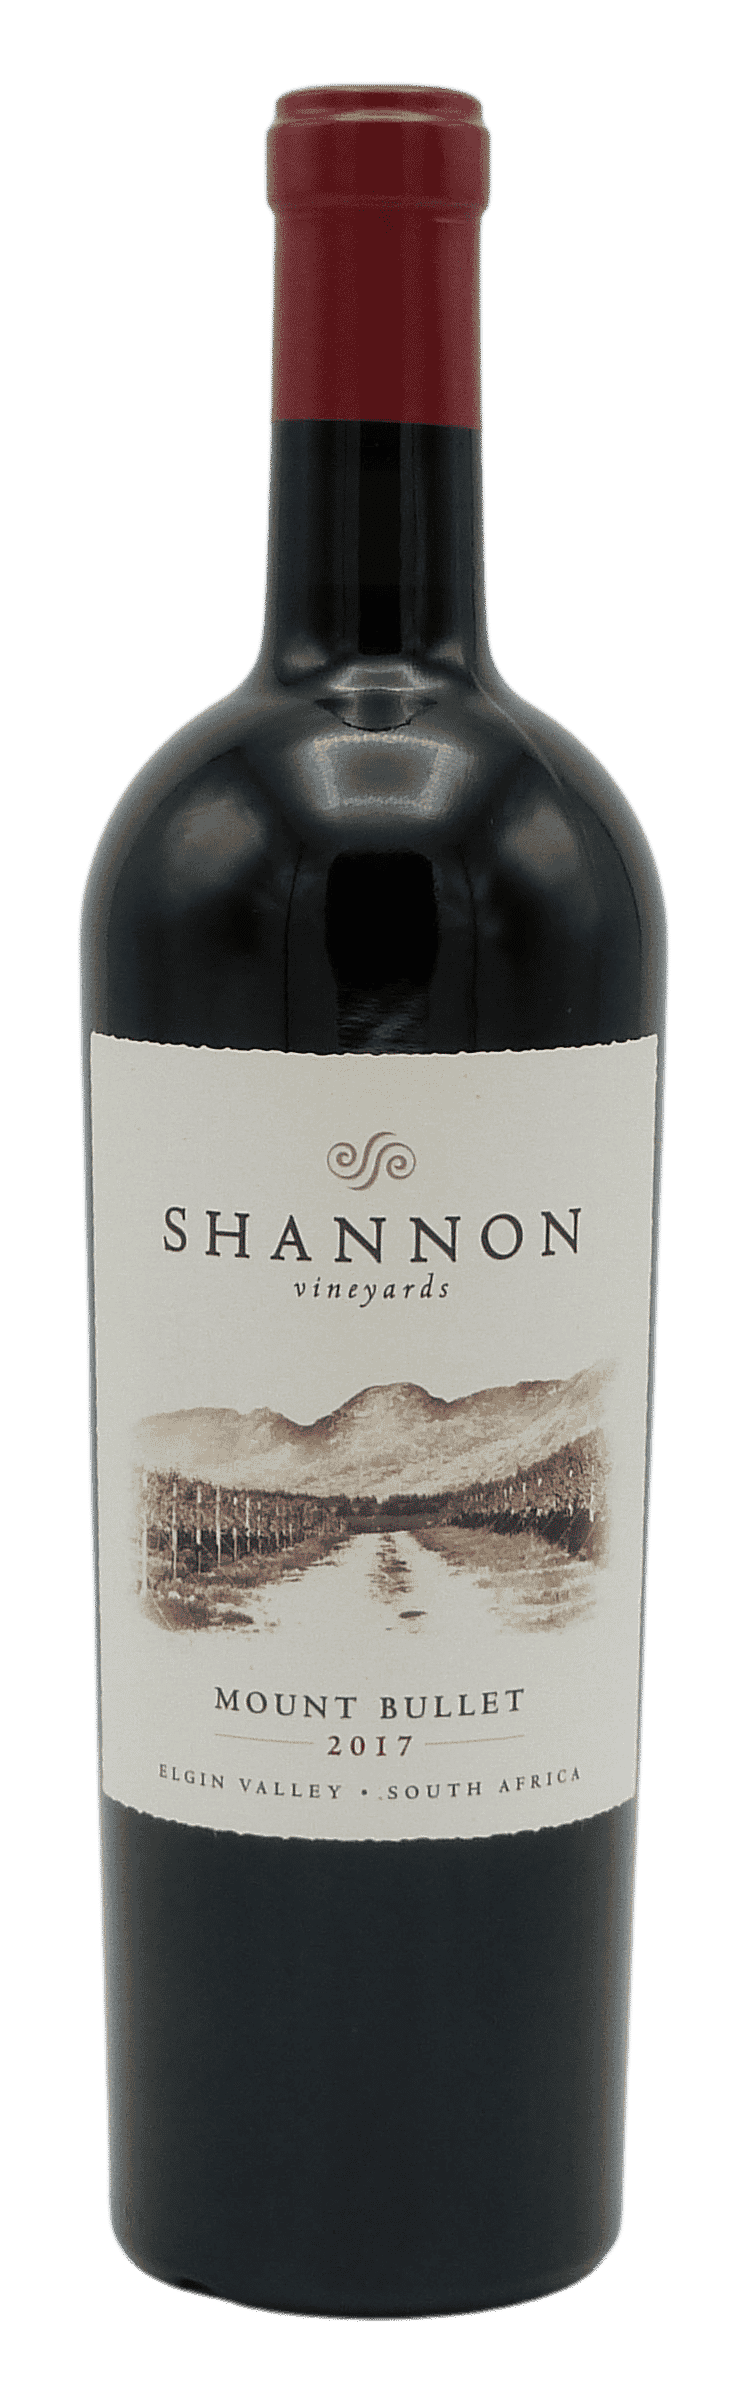 Capeandgrapes Zuid-Afrikaanse wijnen Shannon Vineyards Mount Bullet Merlot 2017